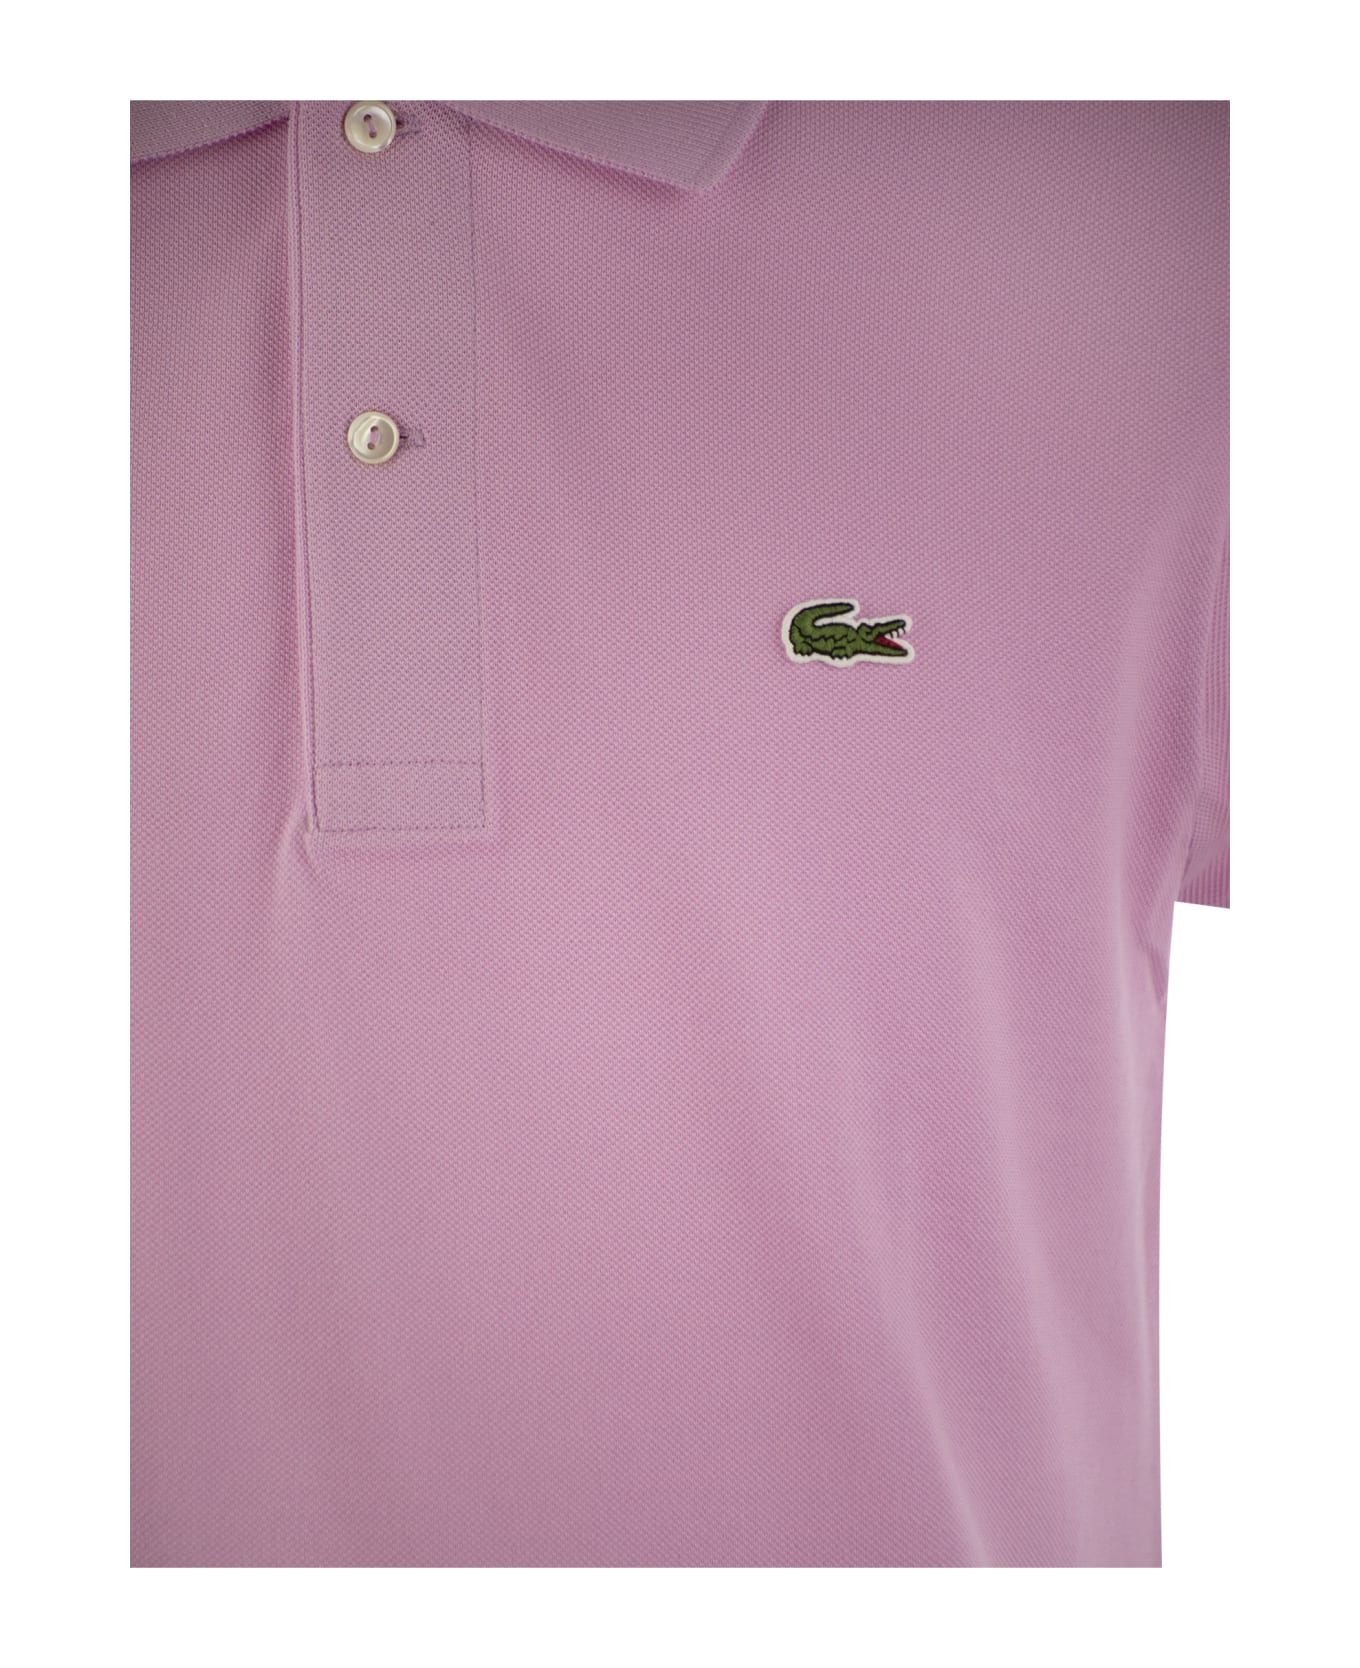 Lacoste Classic Fit Cotton Pique Polo Shirt - Glicine ポロシャツ